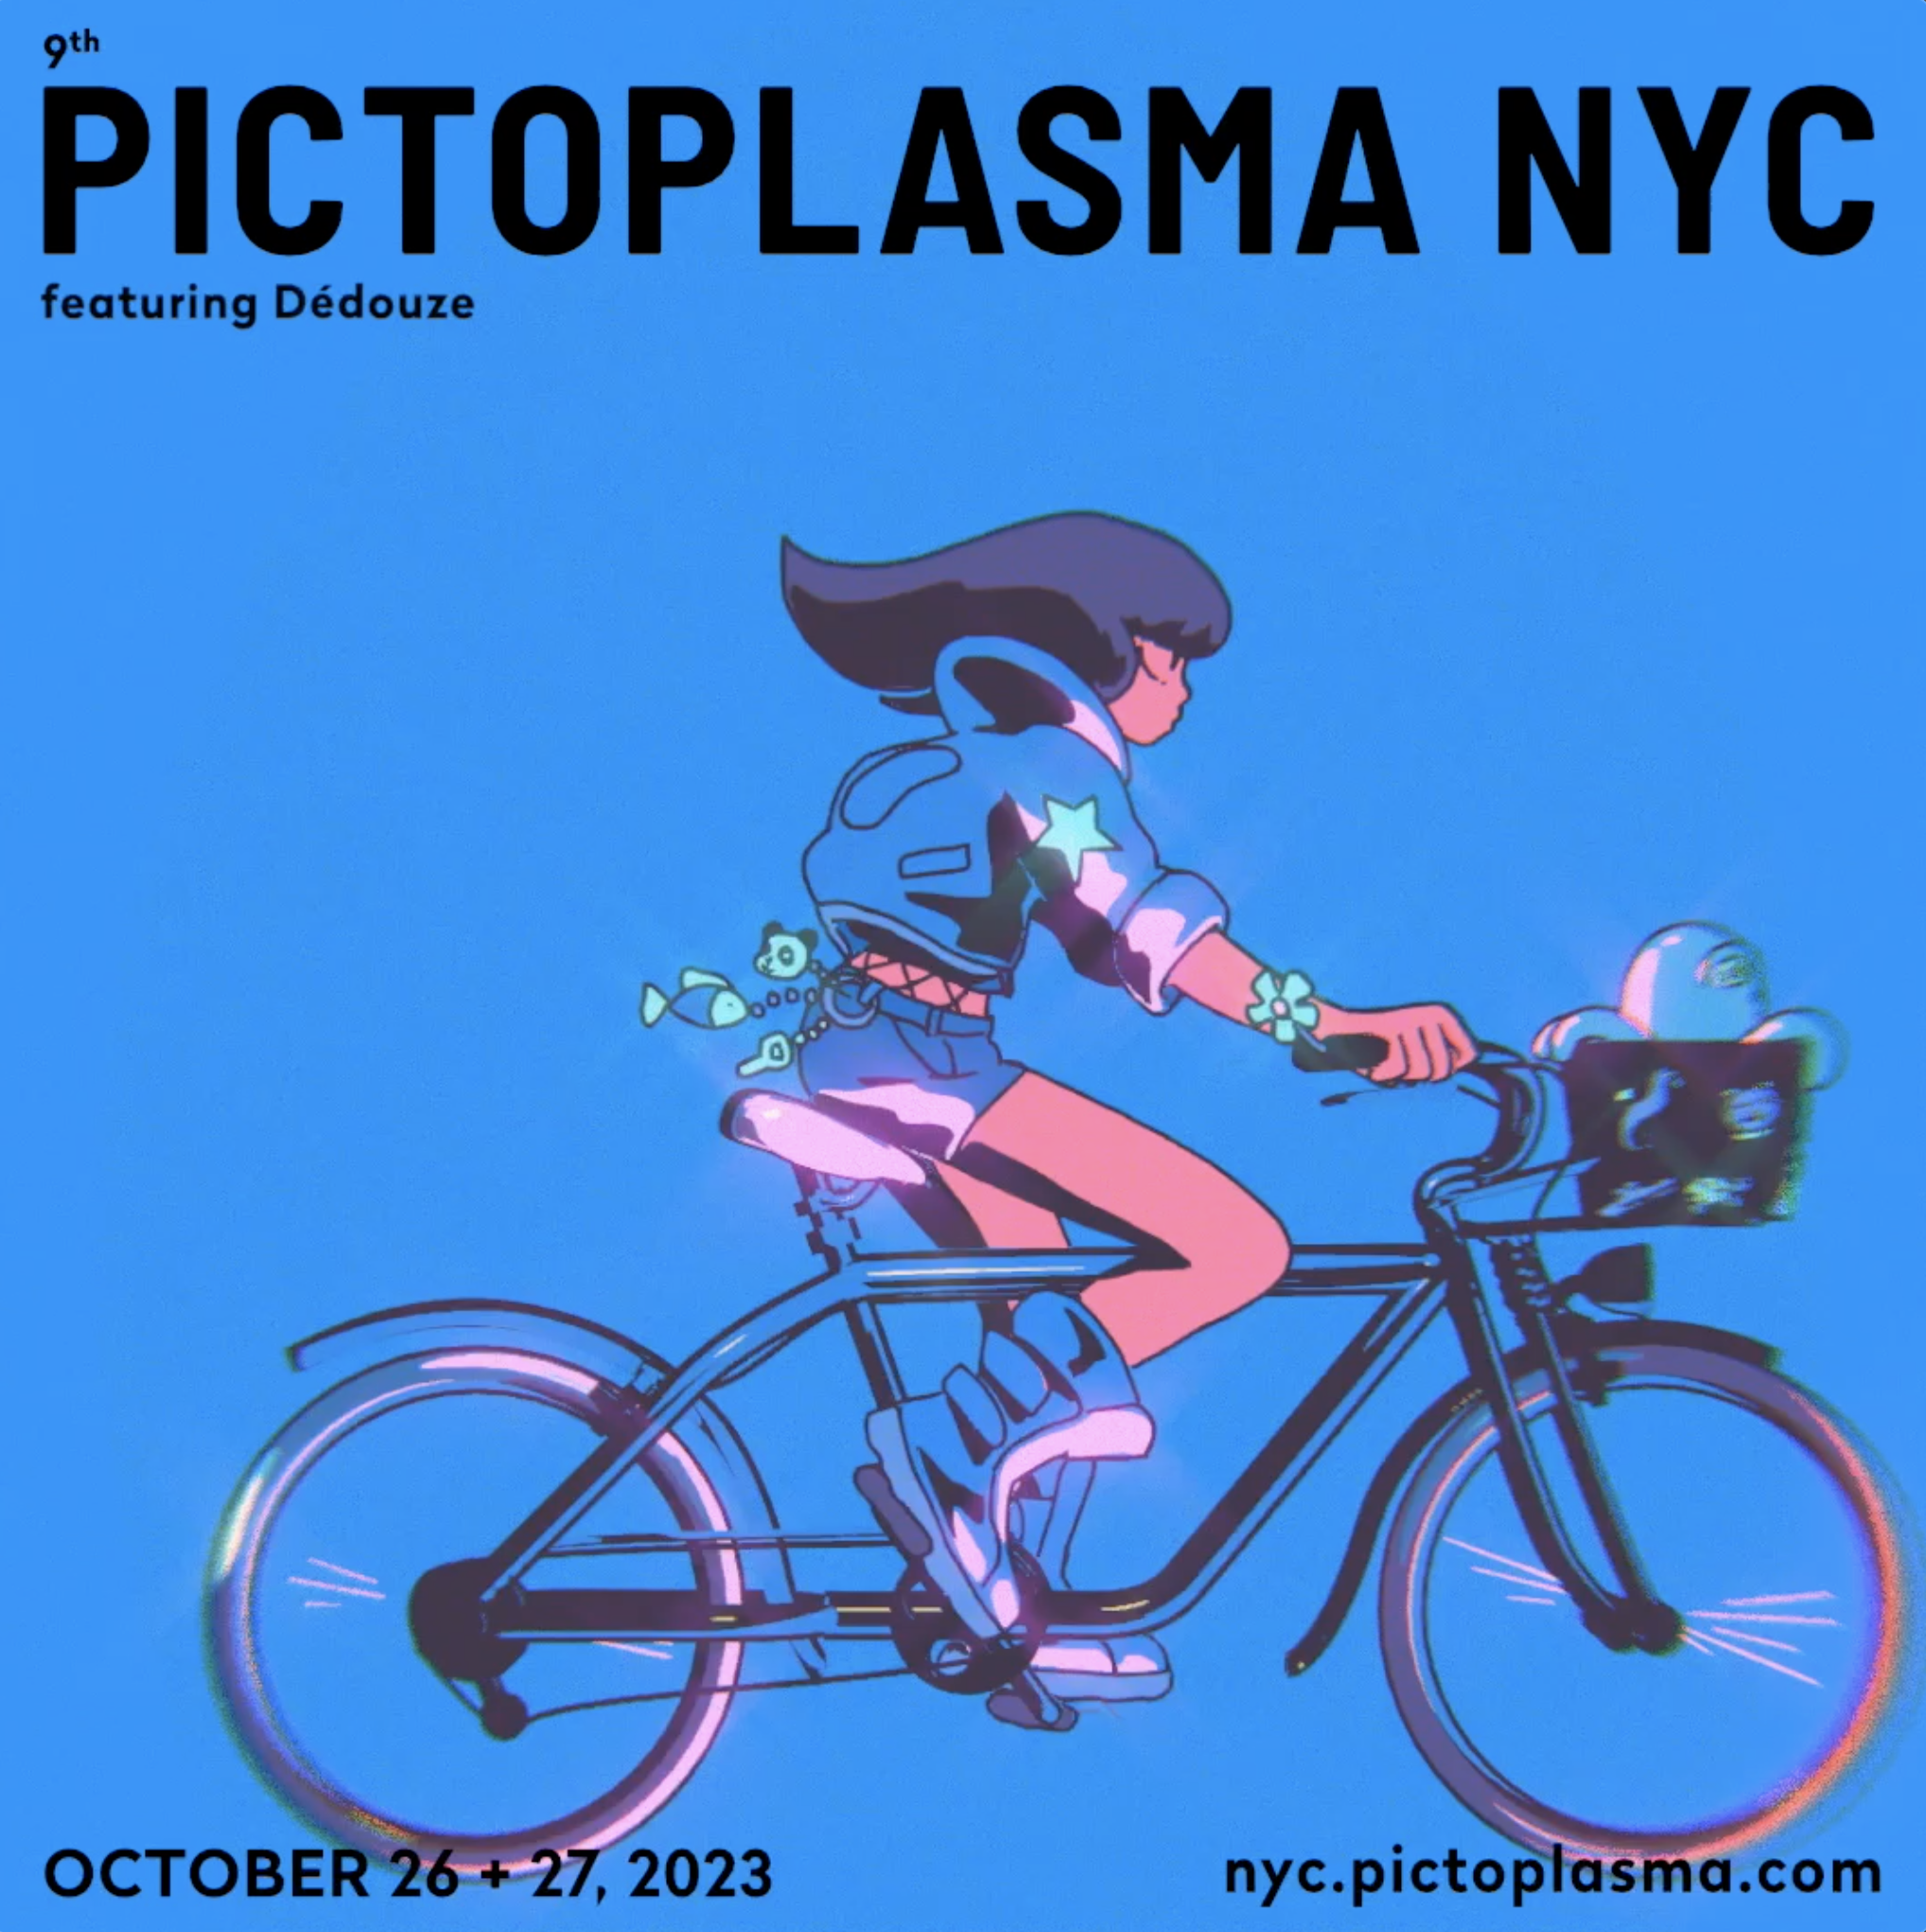 Pictoplasma NYC Returns November 7 & 8